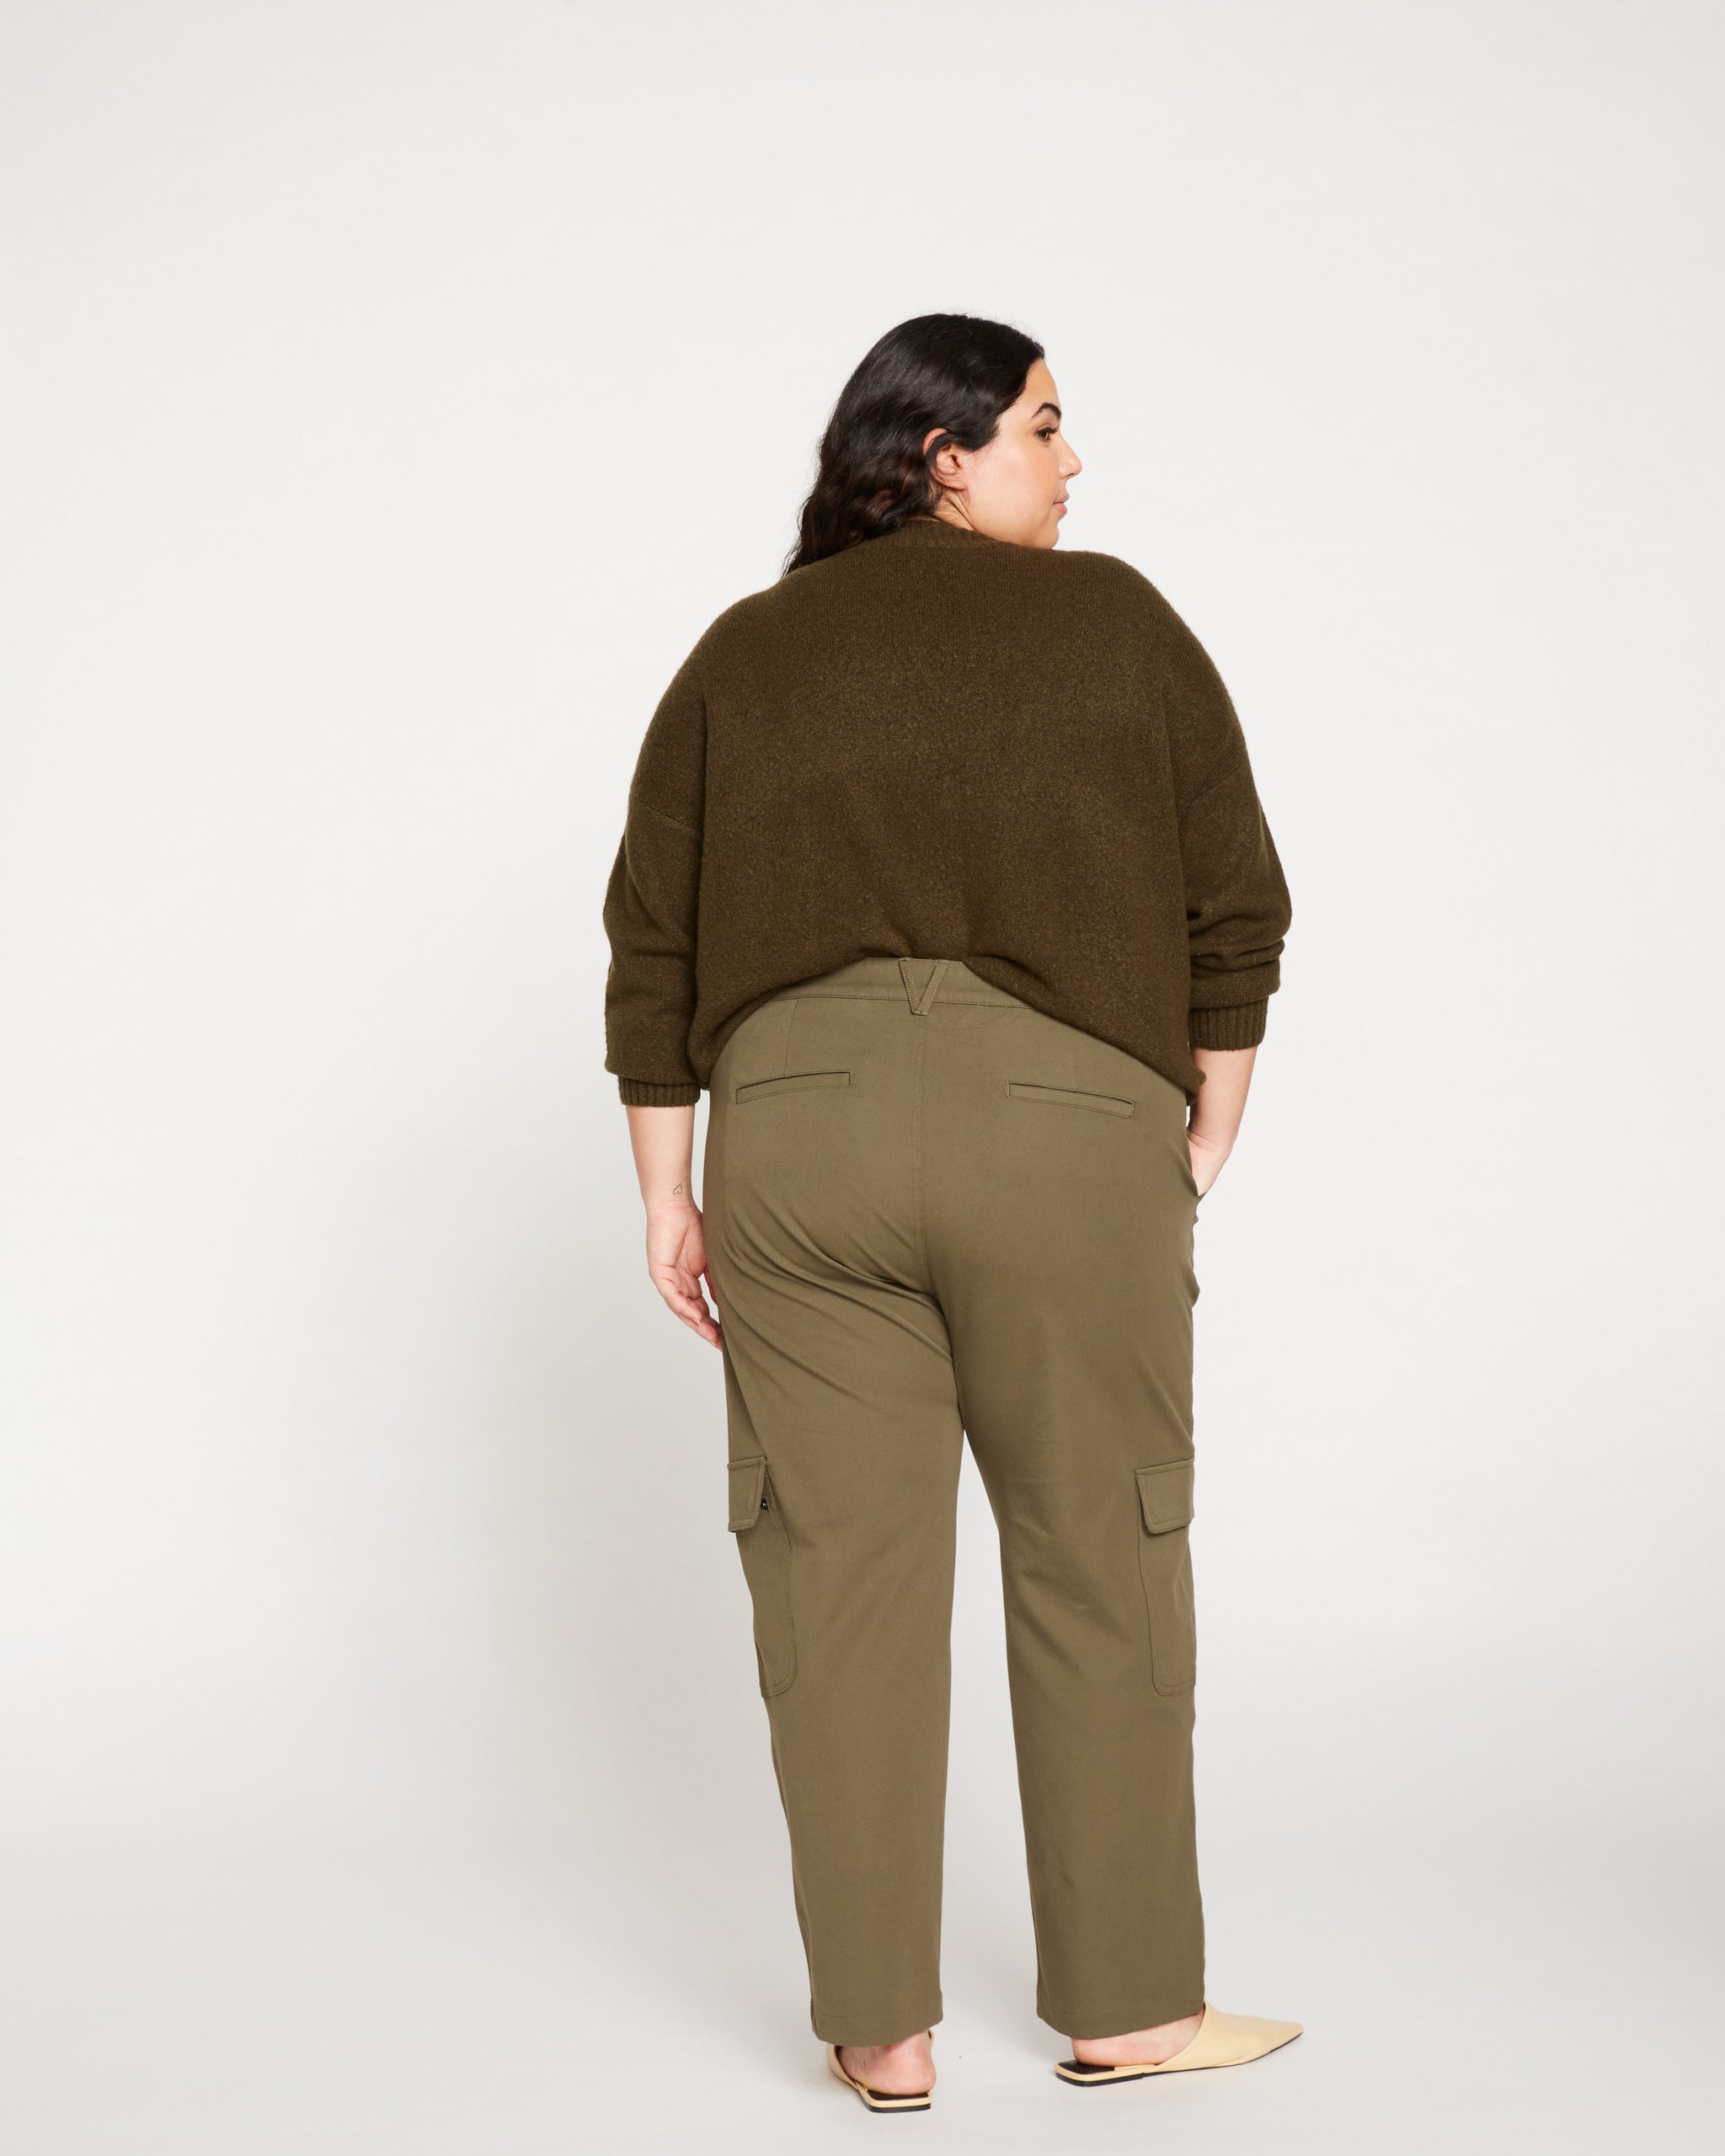 Karlee Stretch Cotton Twill Cargo Pants - Ivy | Universal Standard